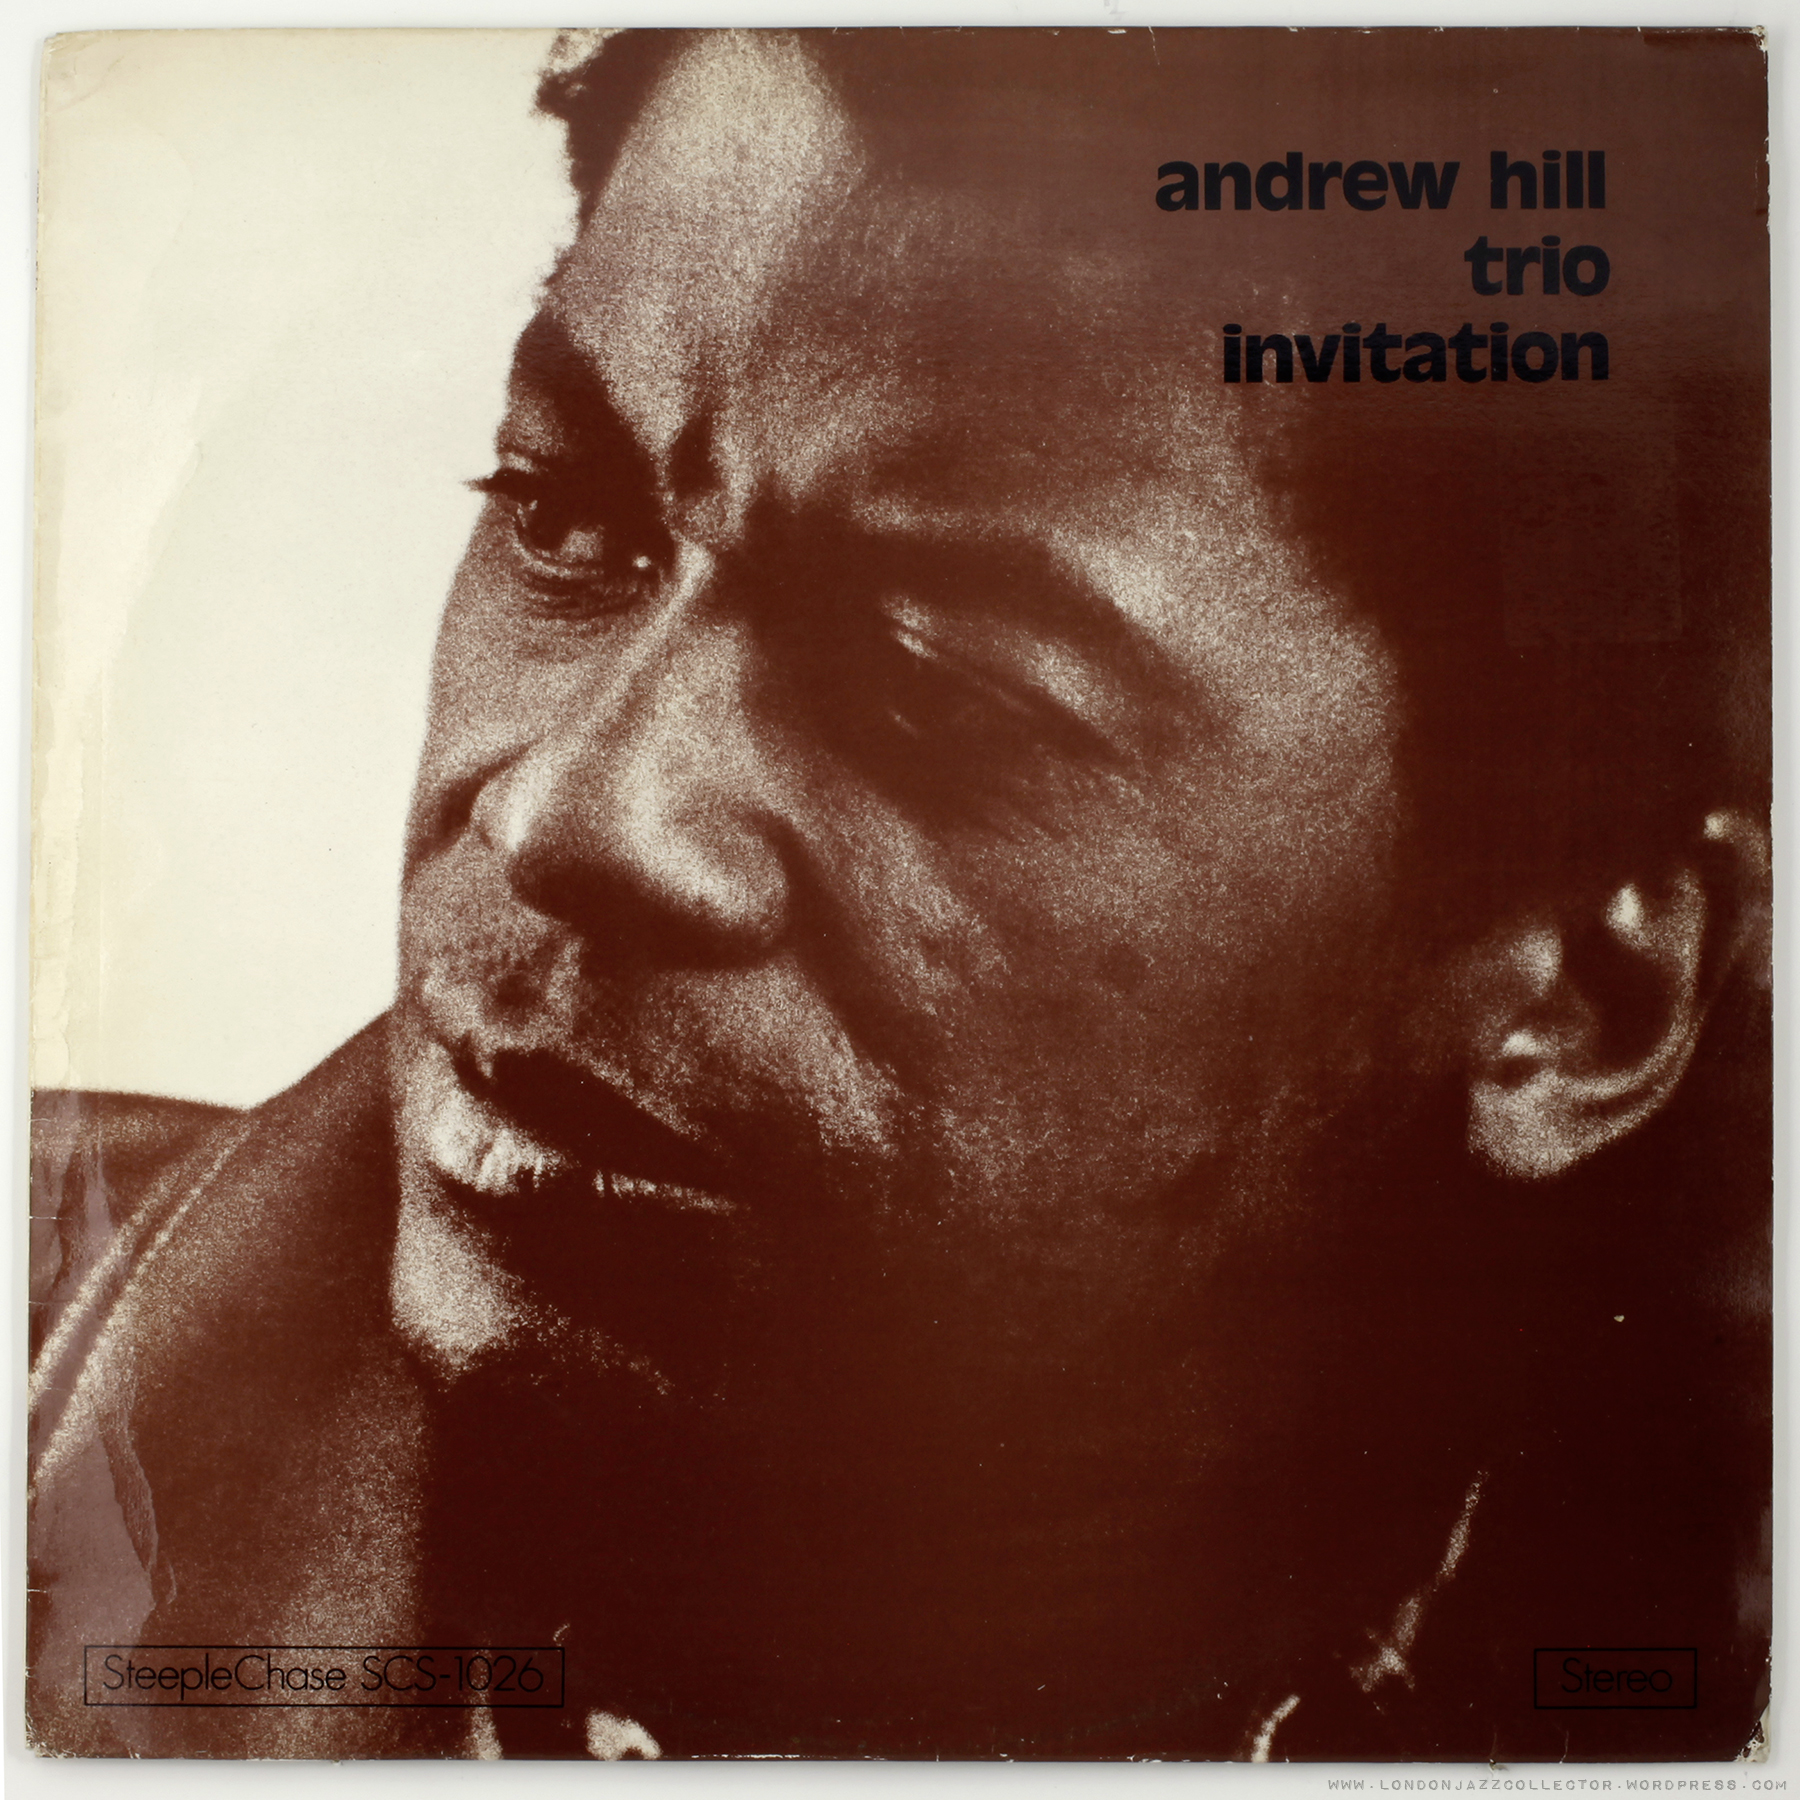 Andrew-Hill-Invitation-1974-frontcover-1800-LJC - andrew-hill-invitation-1974-frontcover-1800-ljc1